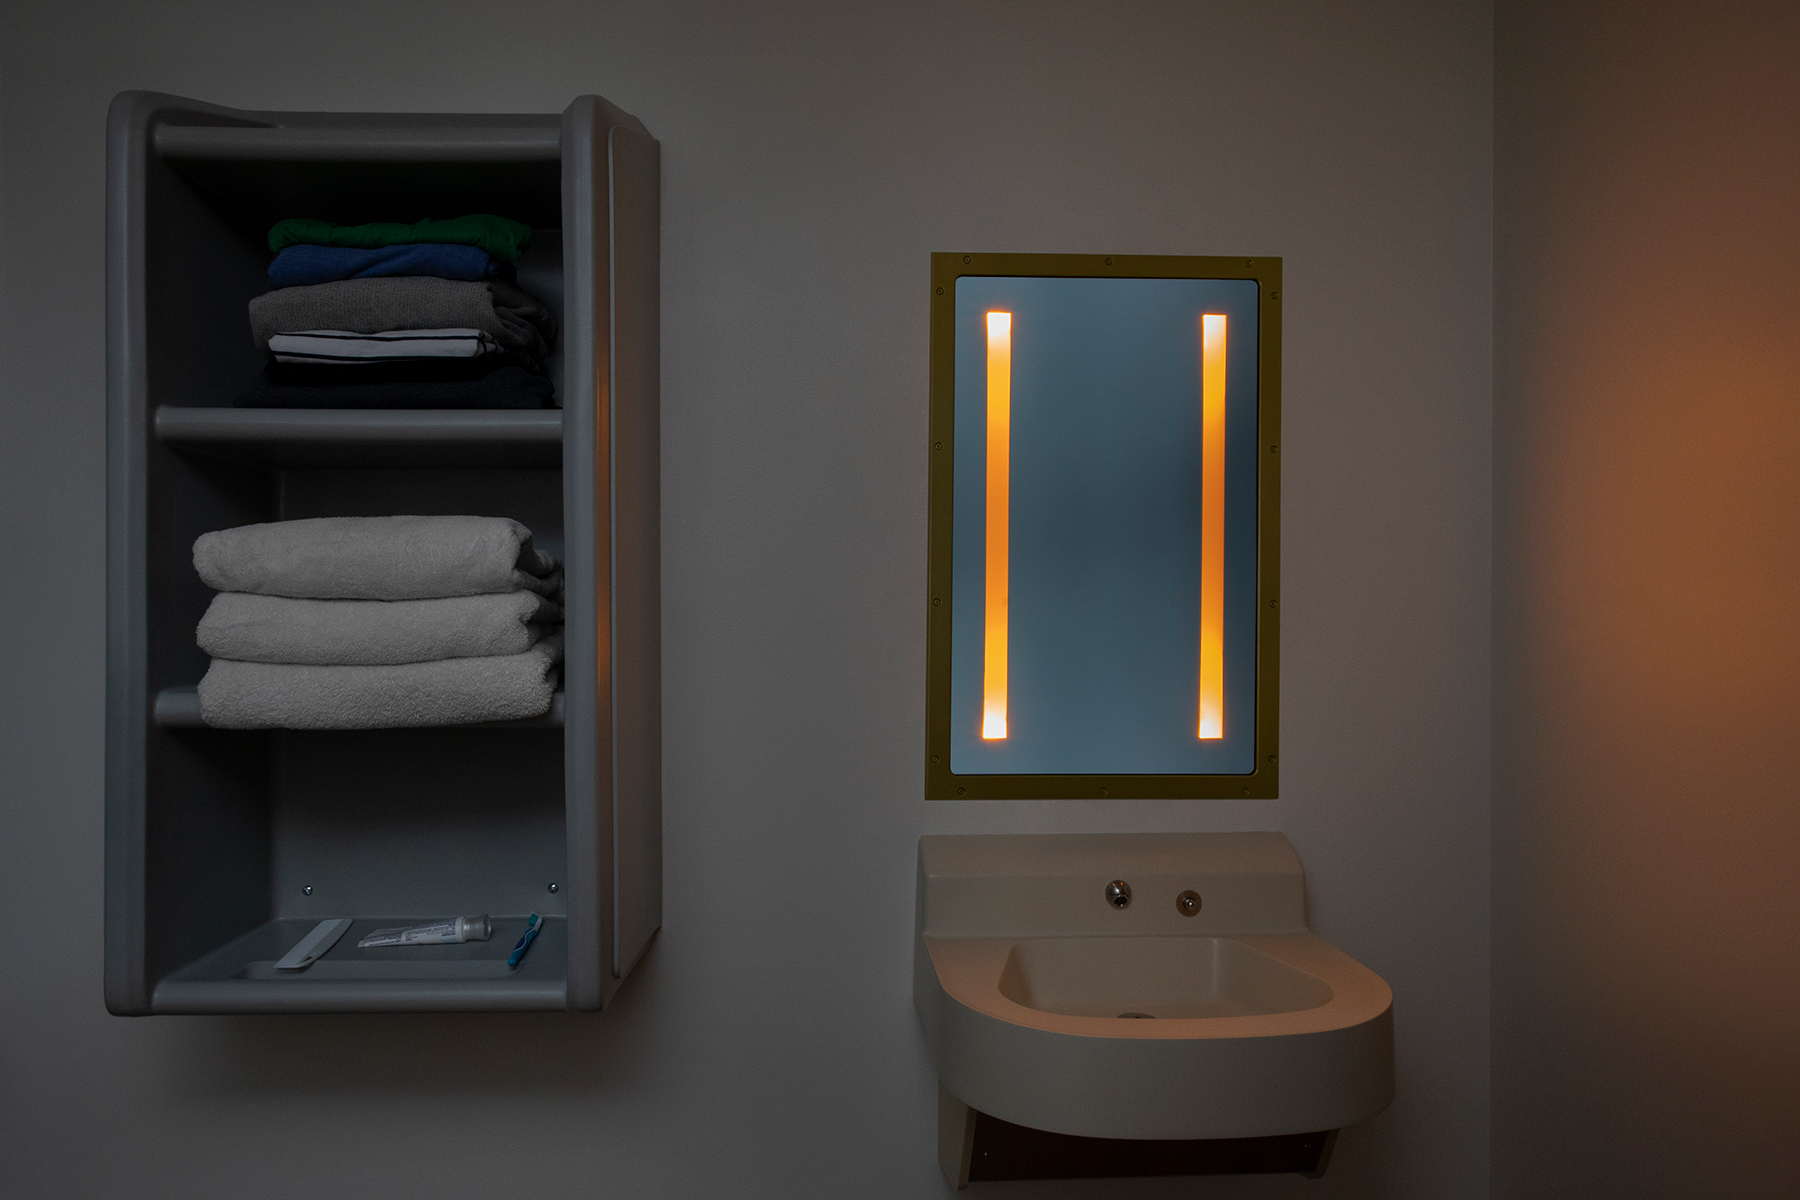 Sole rectangular illuminated mirror in a behavioral health bathroom with nightlight mode on